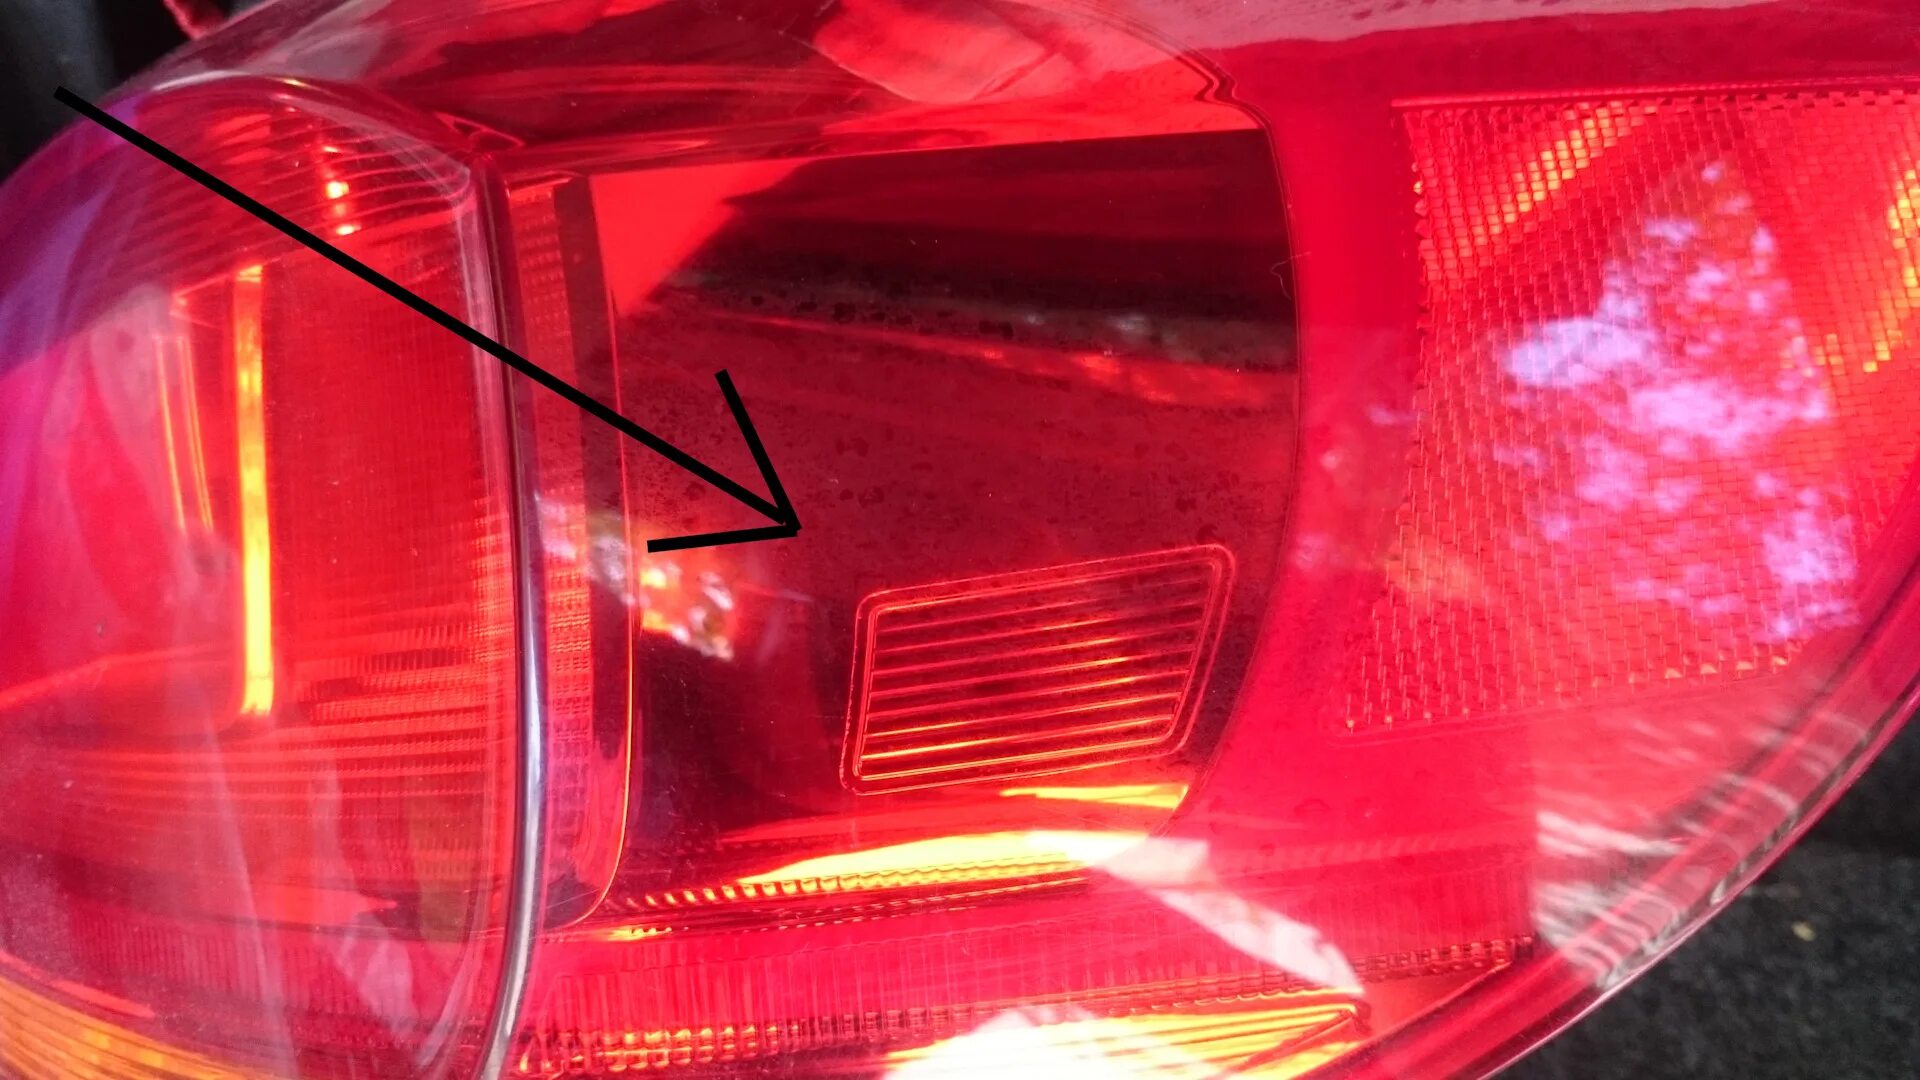 Задний левый габарит. Volkswagen Tiguan лампа стоп-сигнала. Лампа стоп сигнала Фольксваген Тигуан 2013. Лампочка на стоп сигнал Фольксваген Тигуан 2013. Лампы Тигуан заднего стоп сигнала.